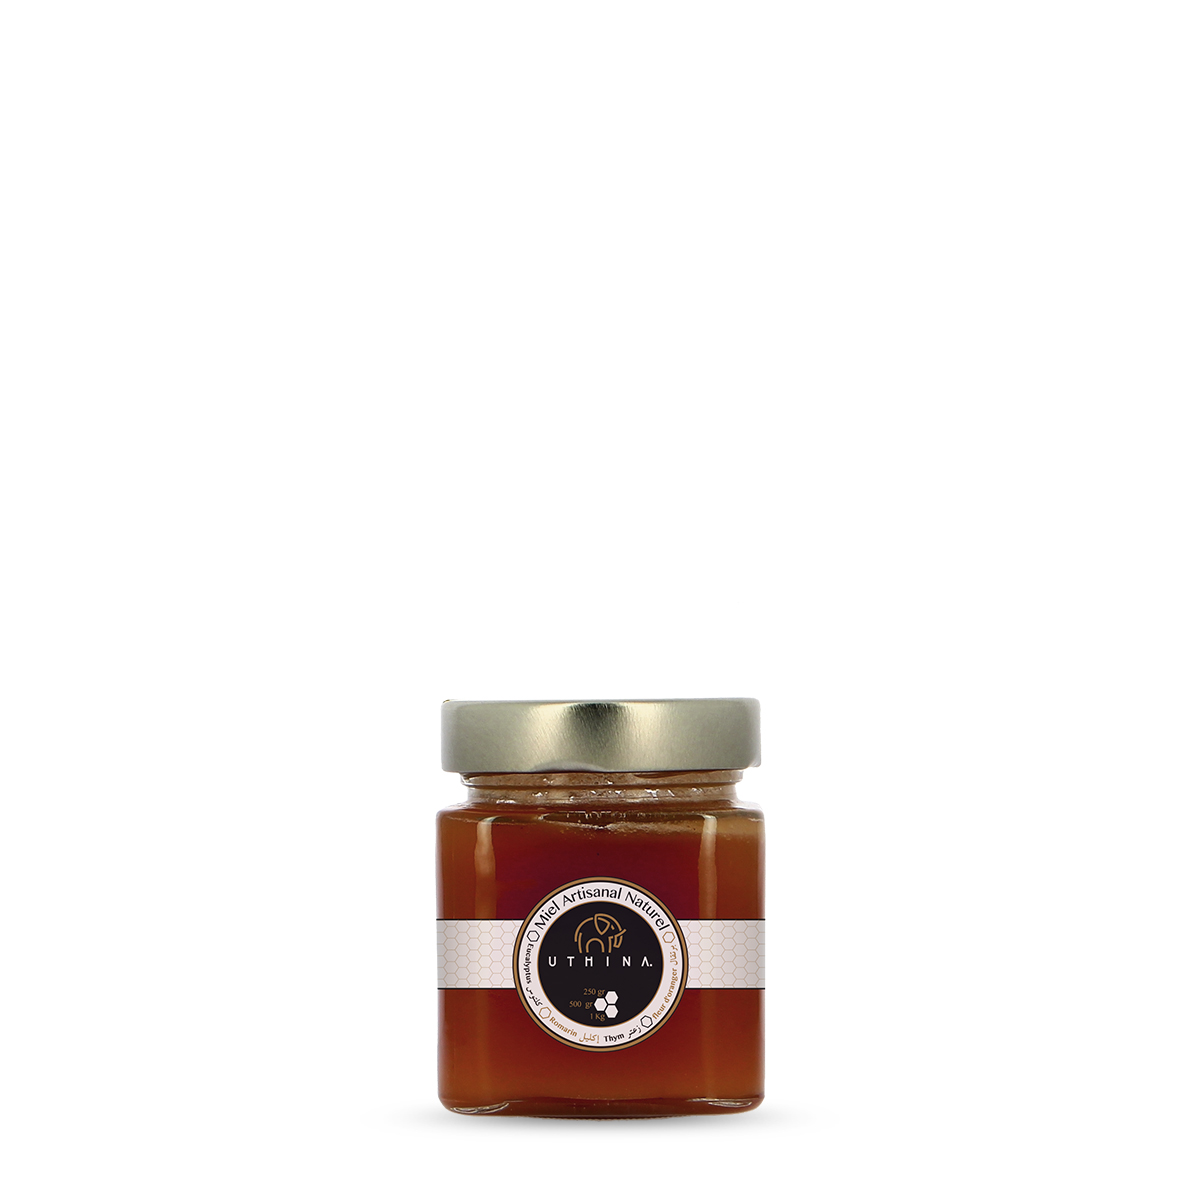 Uthina - Le miel d'Eucalyptus 250g